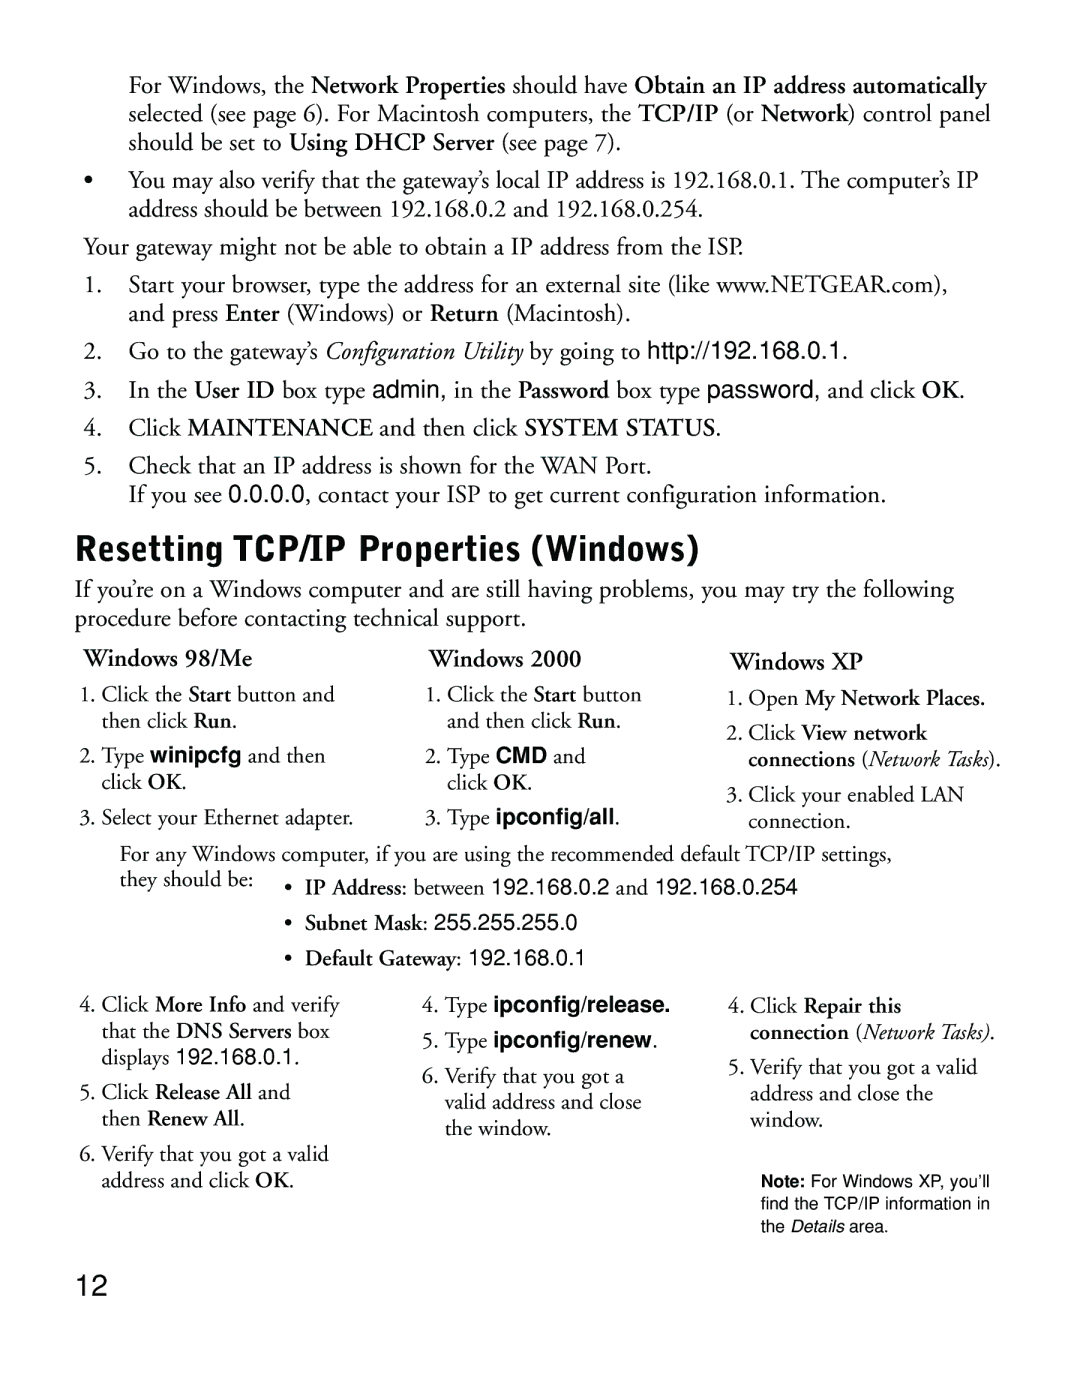 NETGEAR DG814 manual Resetting TCP/IP Properties Windows, Click Maintenance and then click System Status 